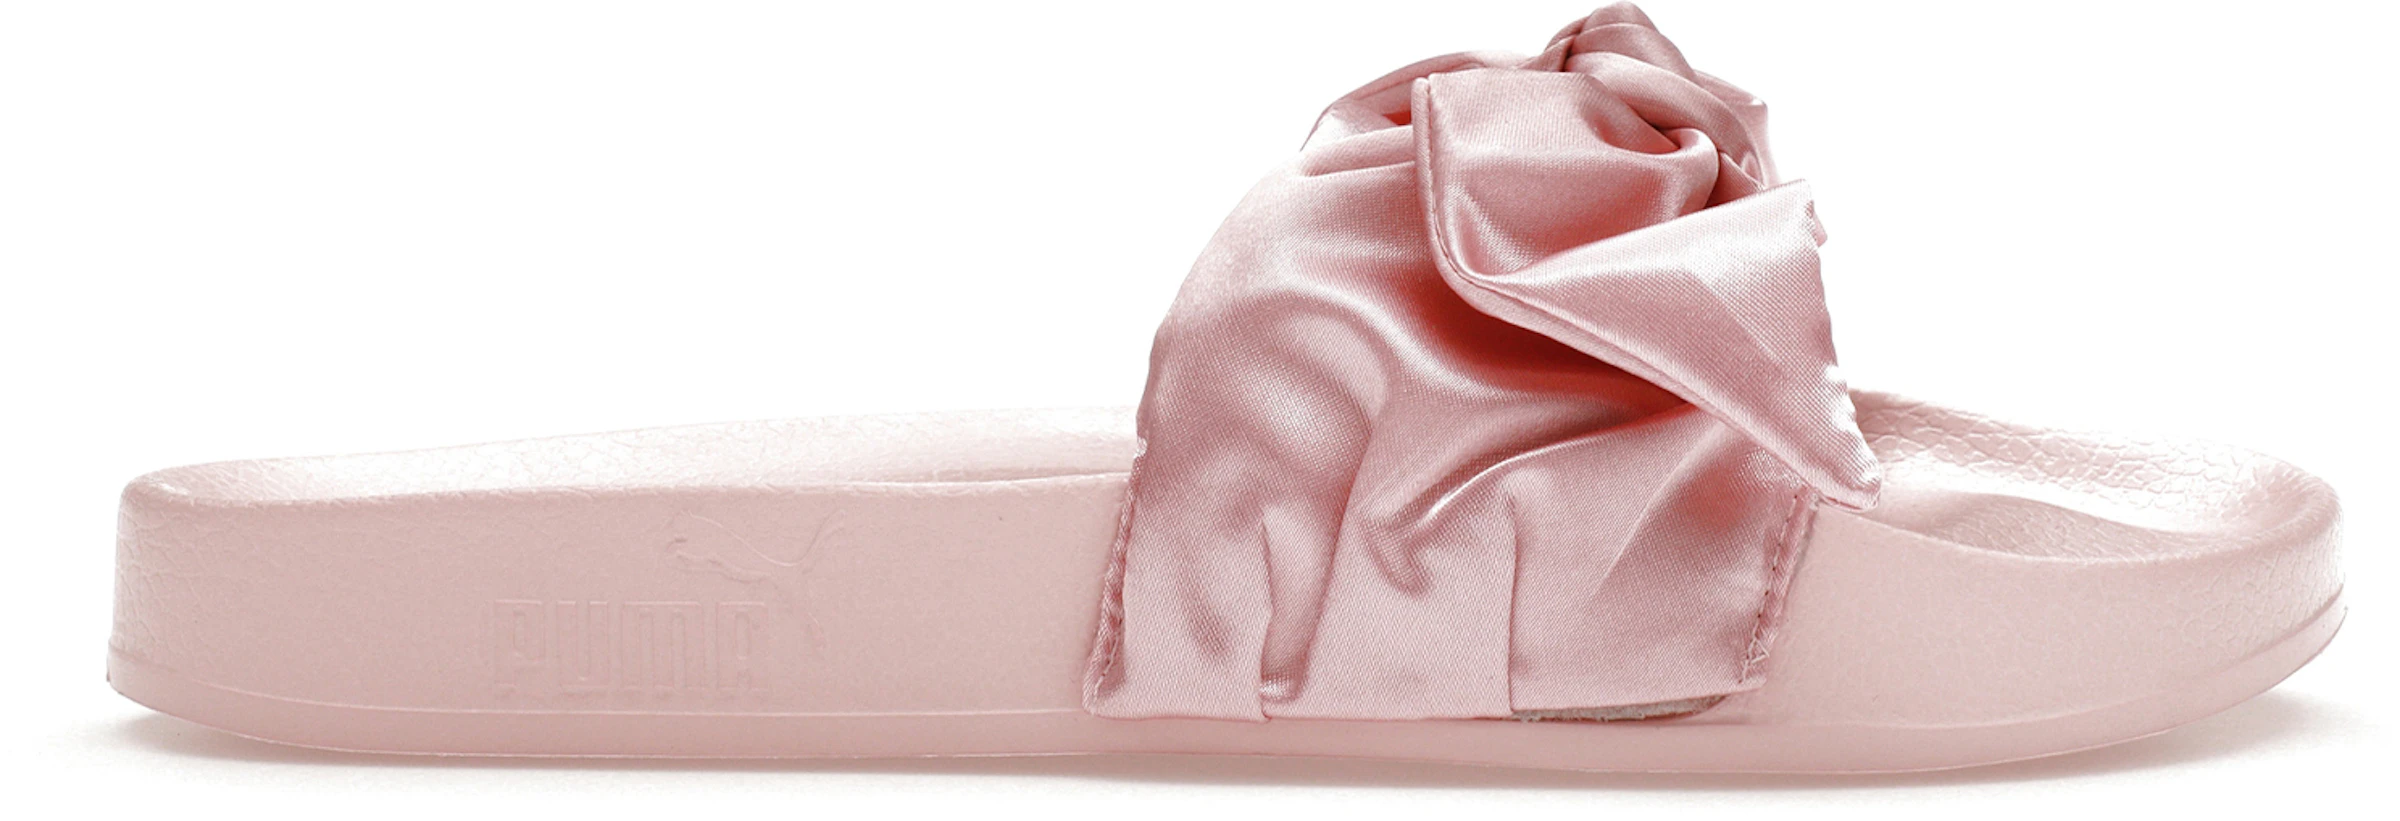 Puma Bow Slide Rihanna Fenty Pink (W) - 365774-03 -